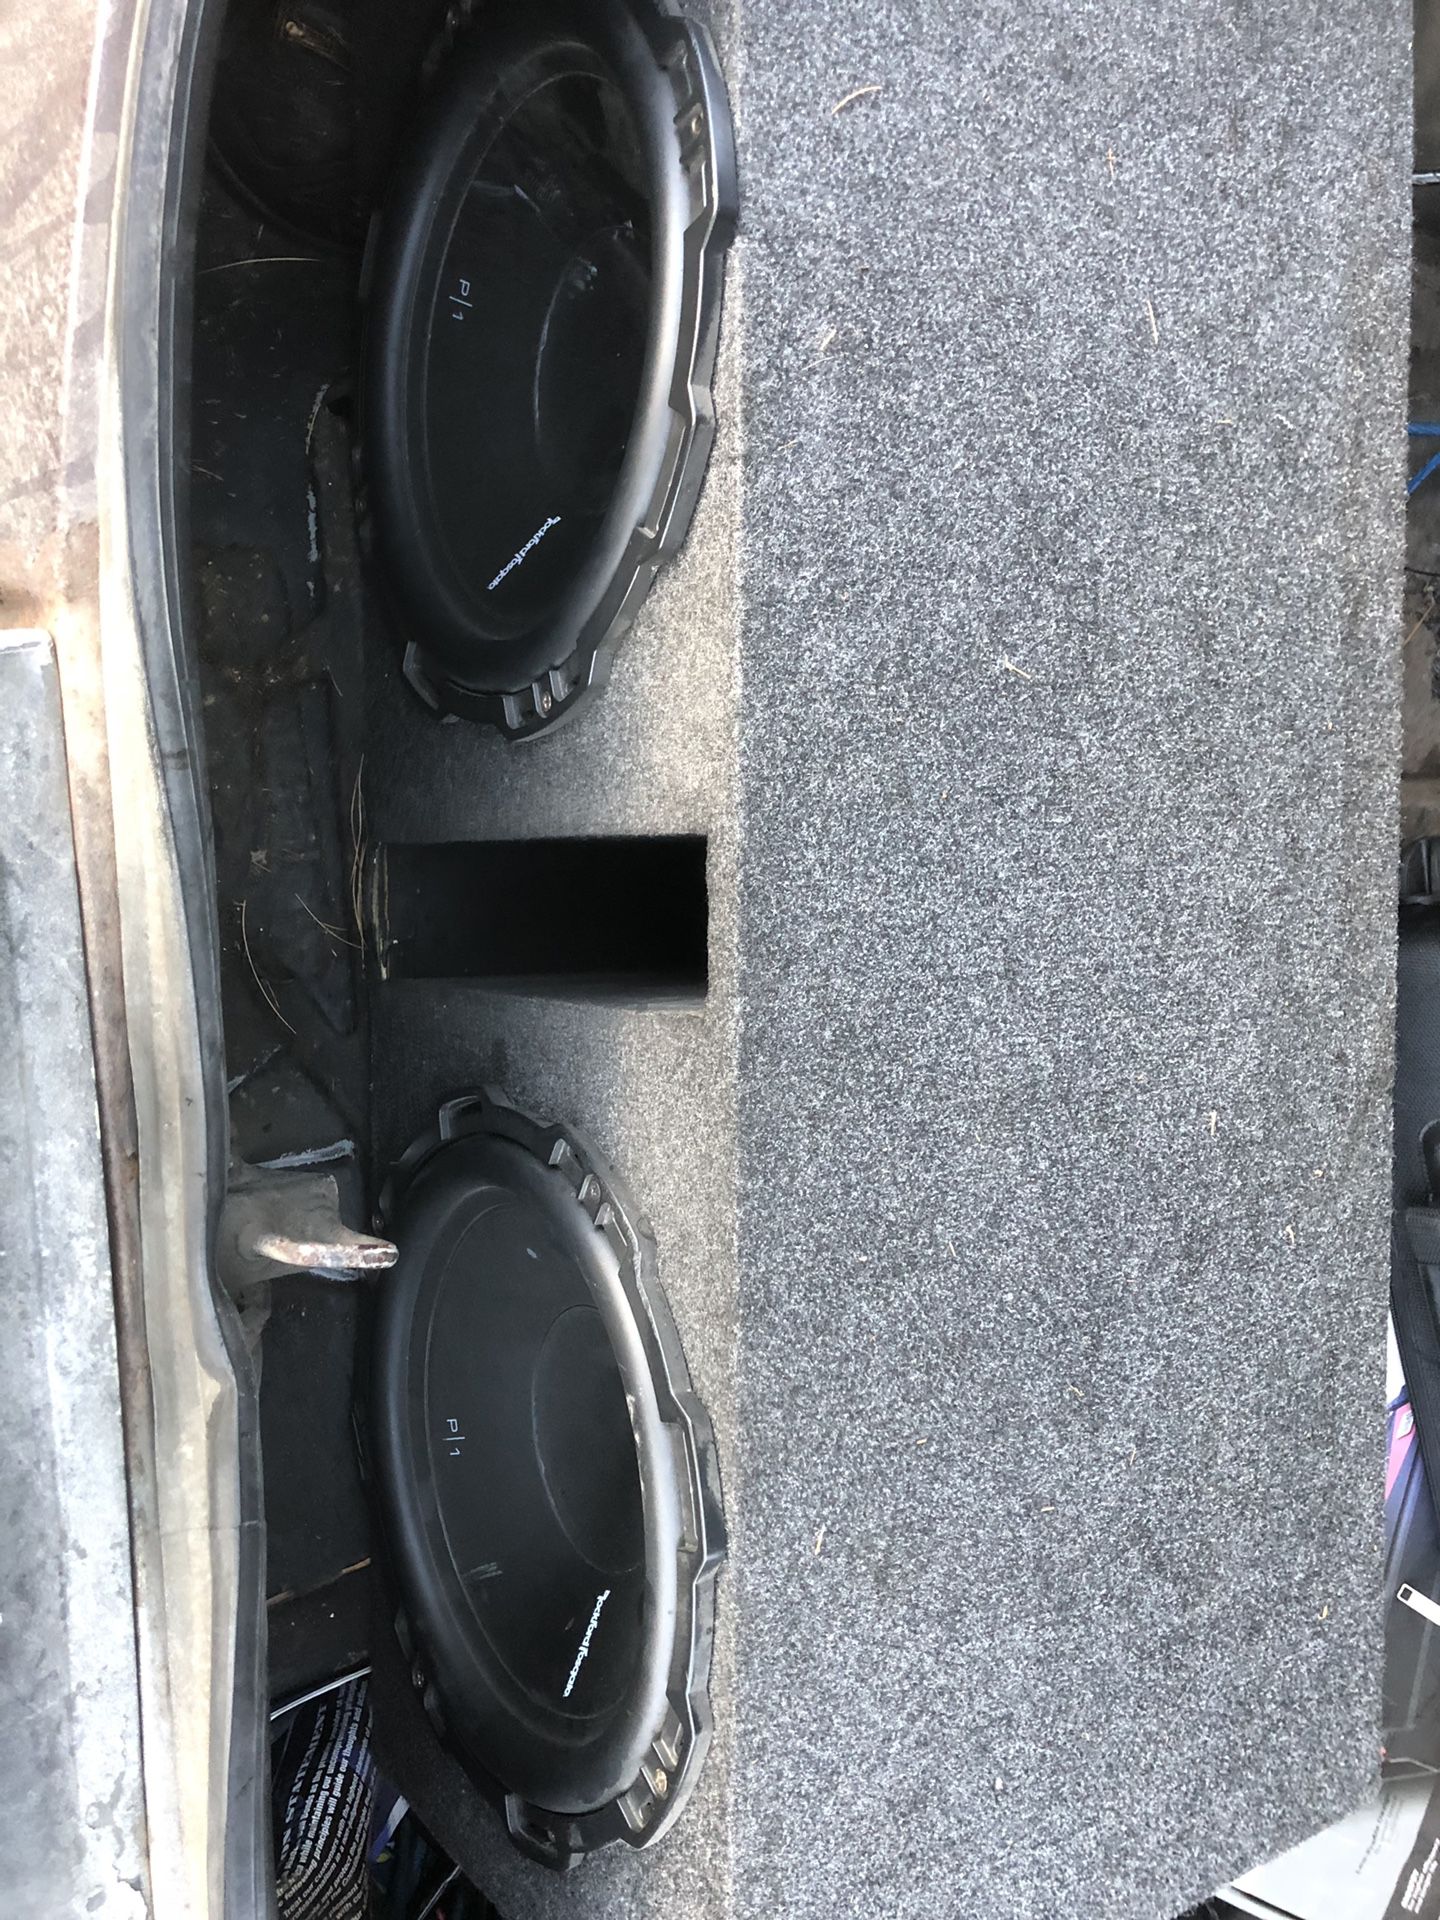 12 inch speakers